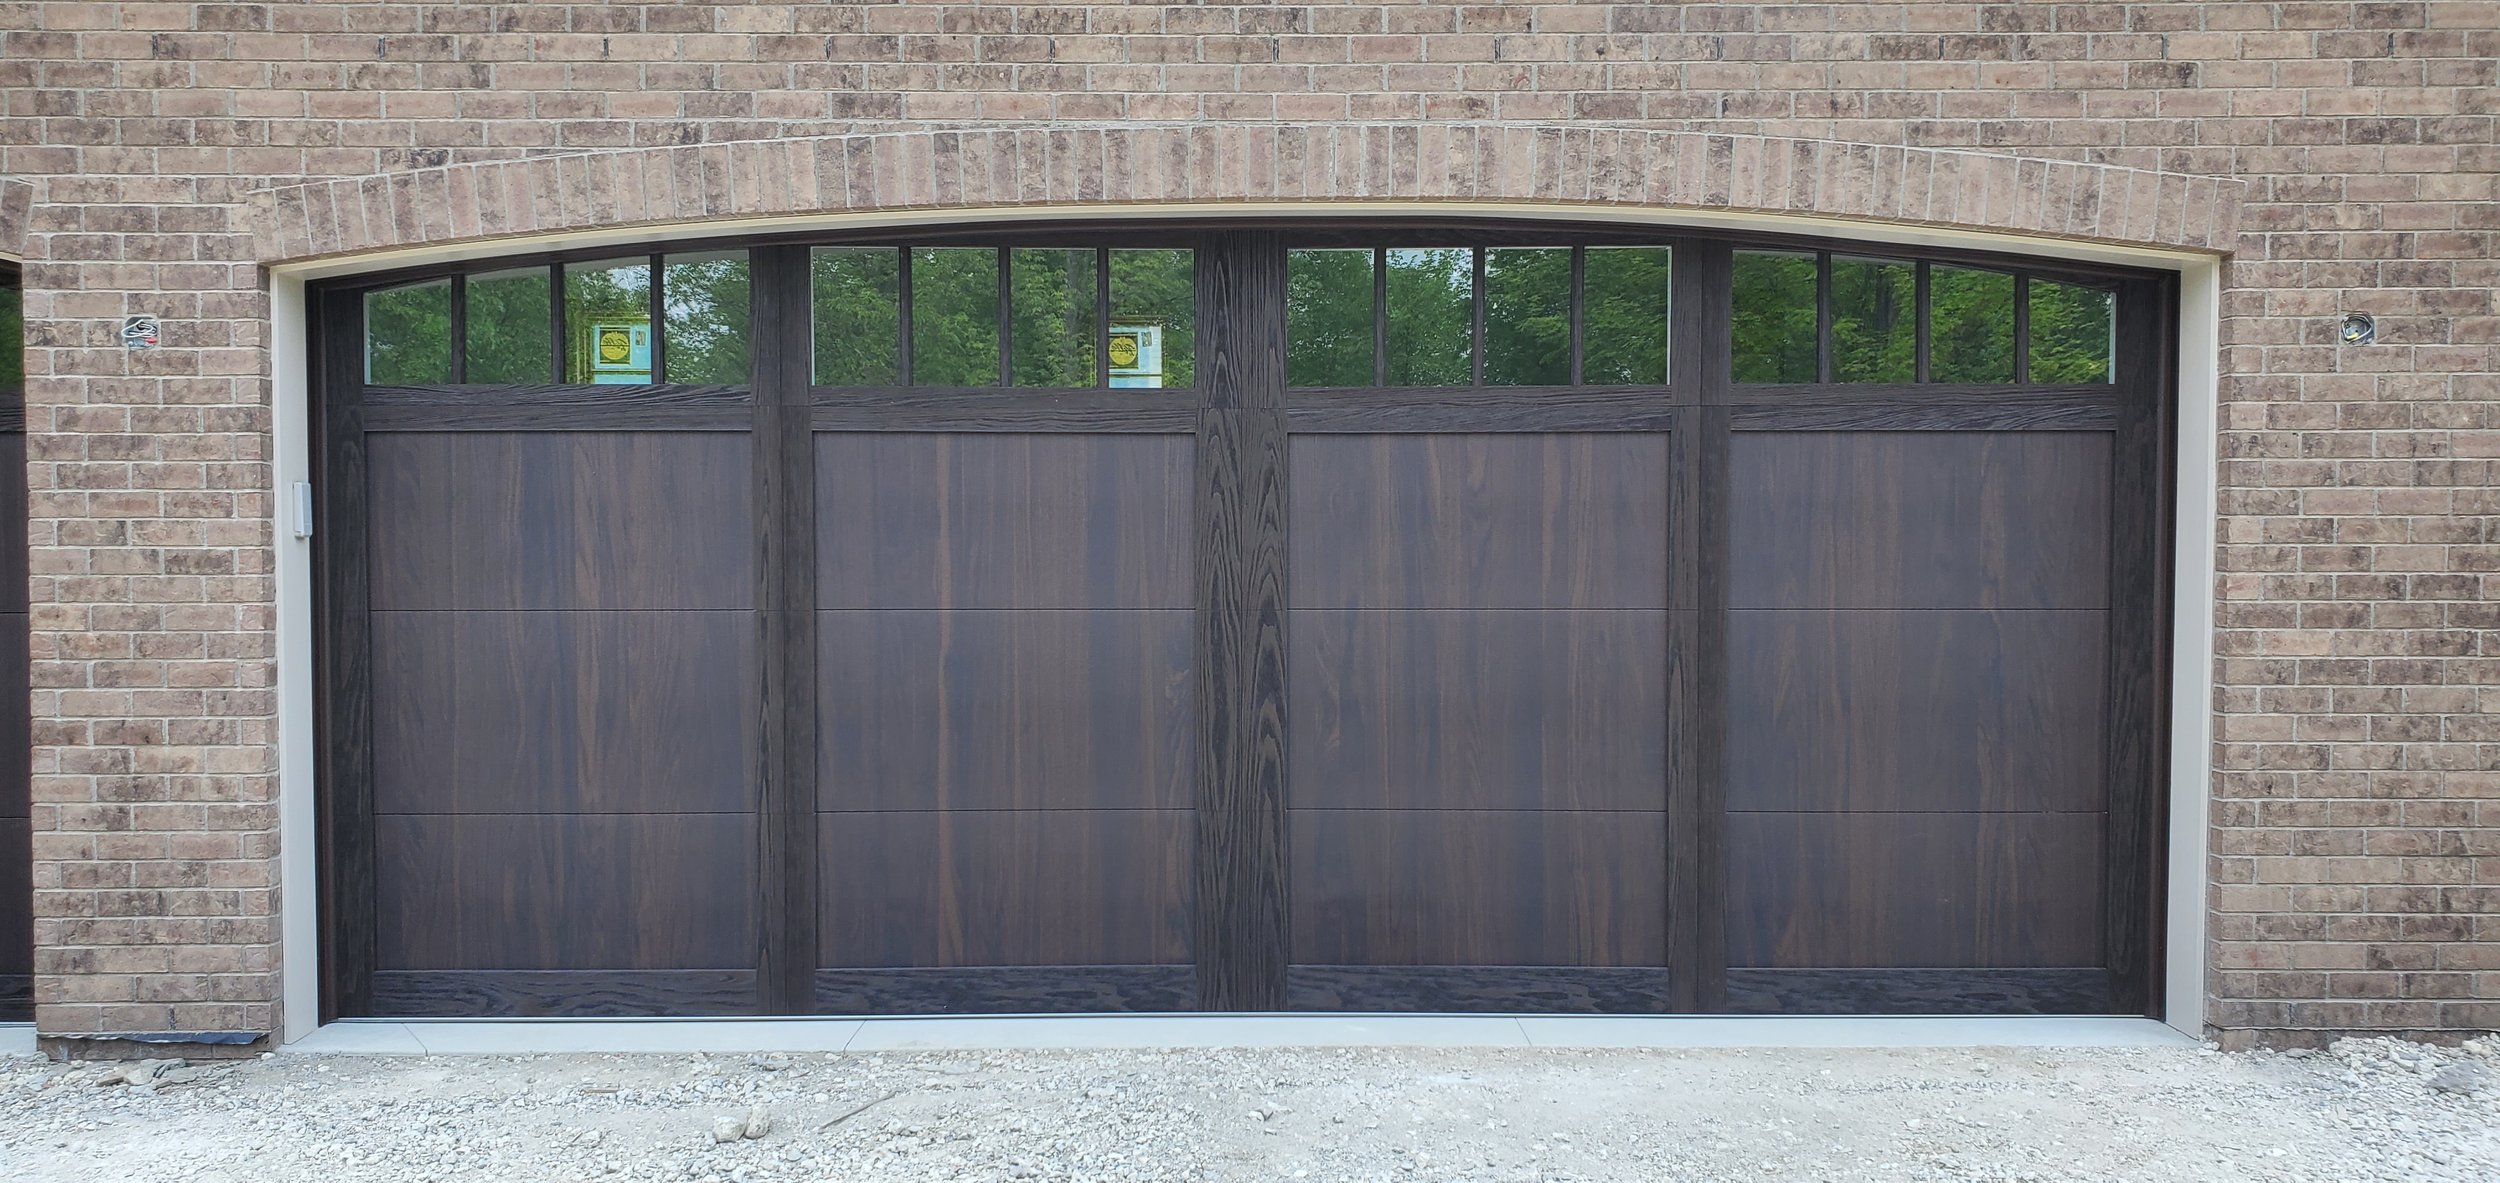 New Troy Michigan garage door sales repair company